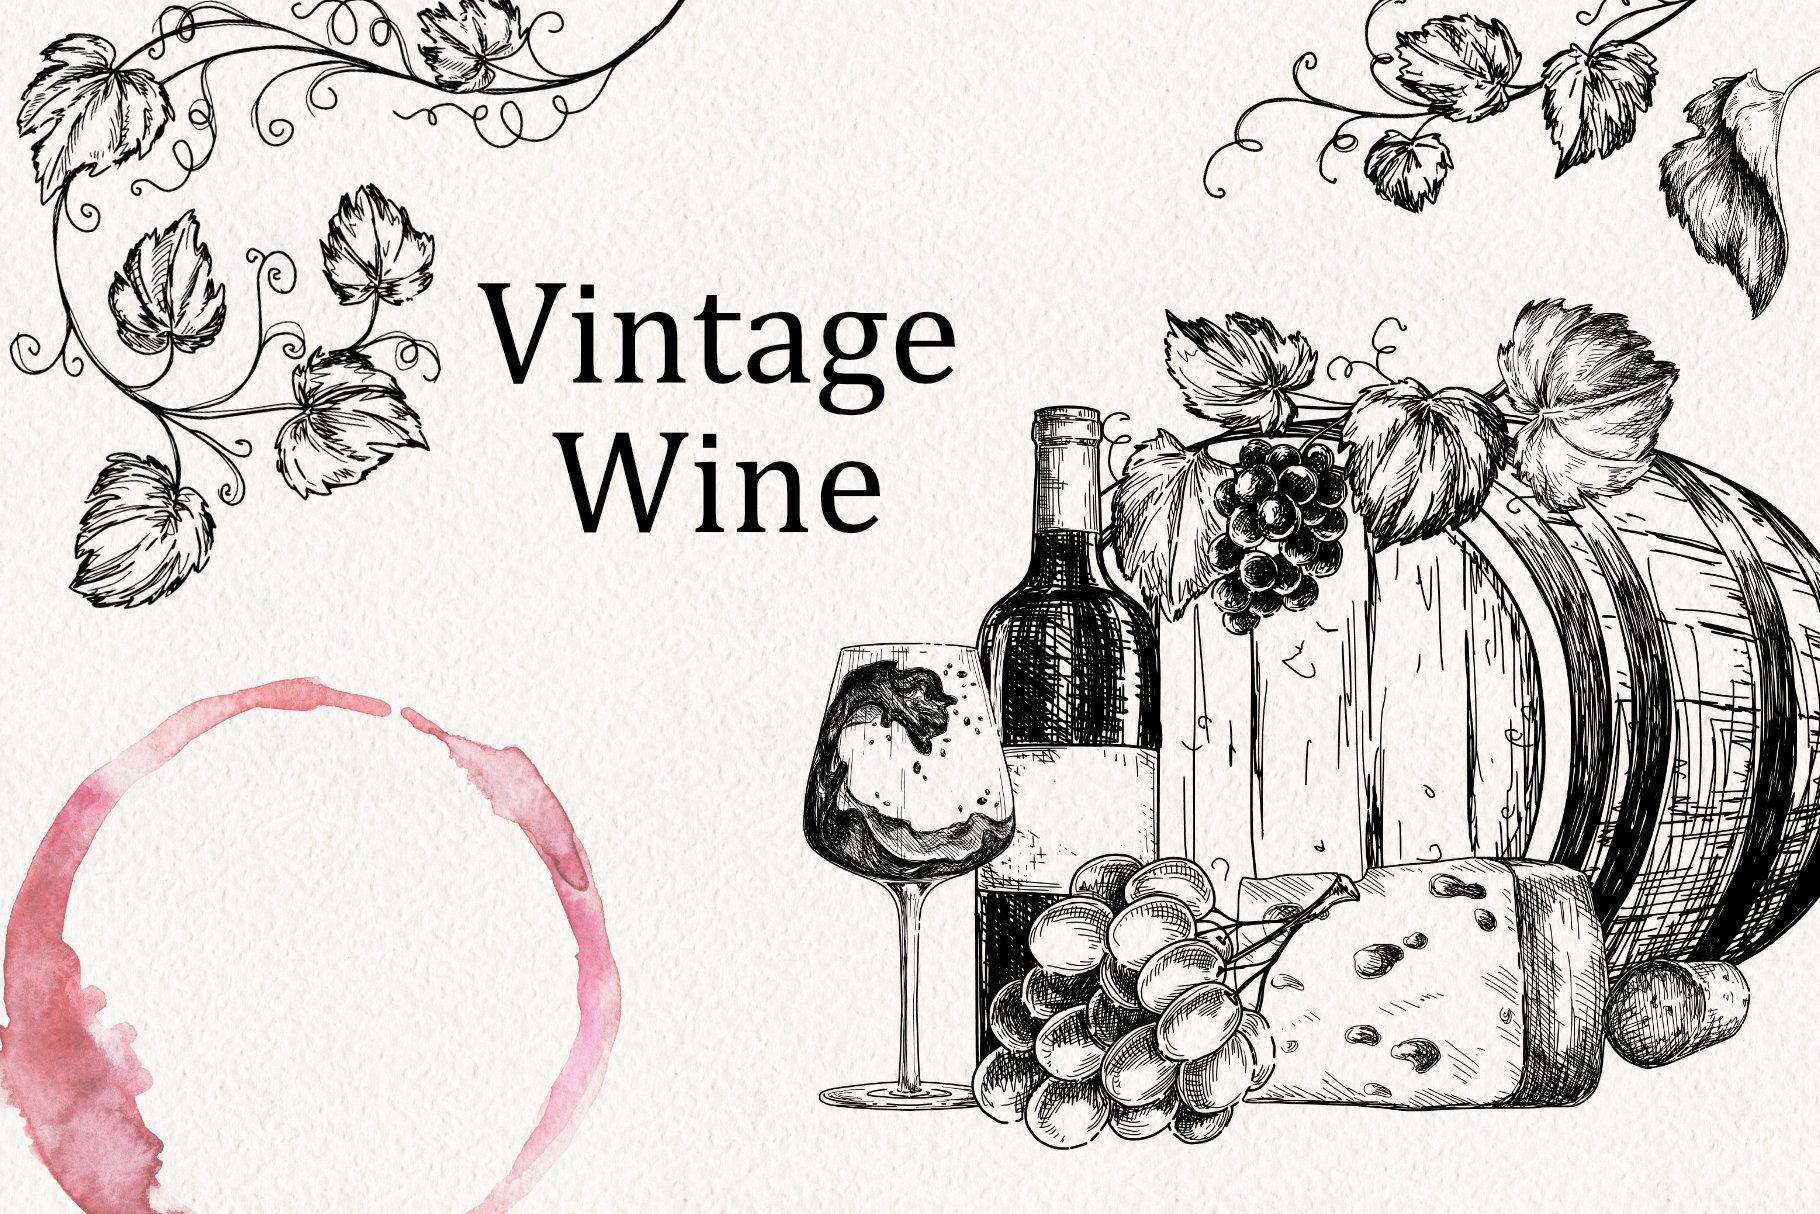 Vintage Wine cover image.